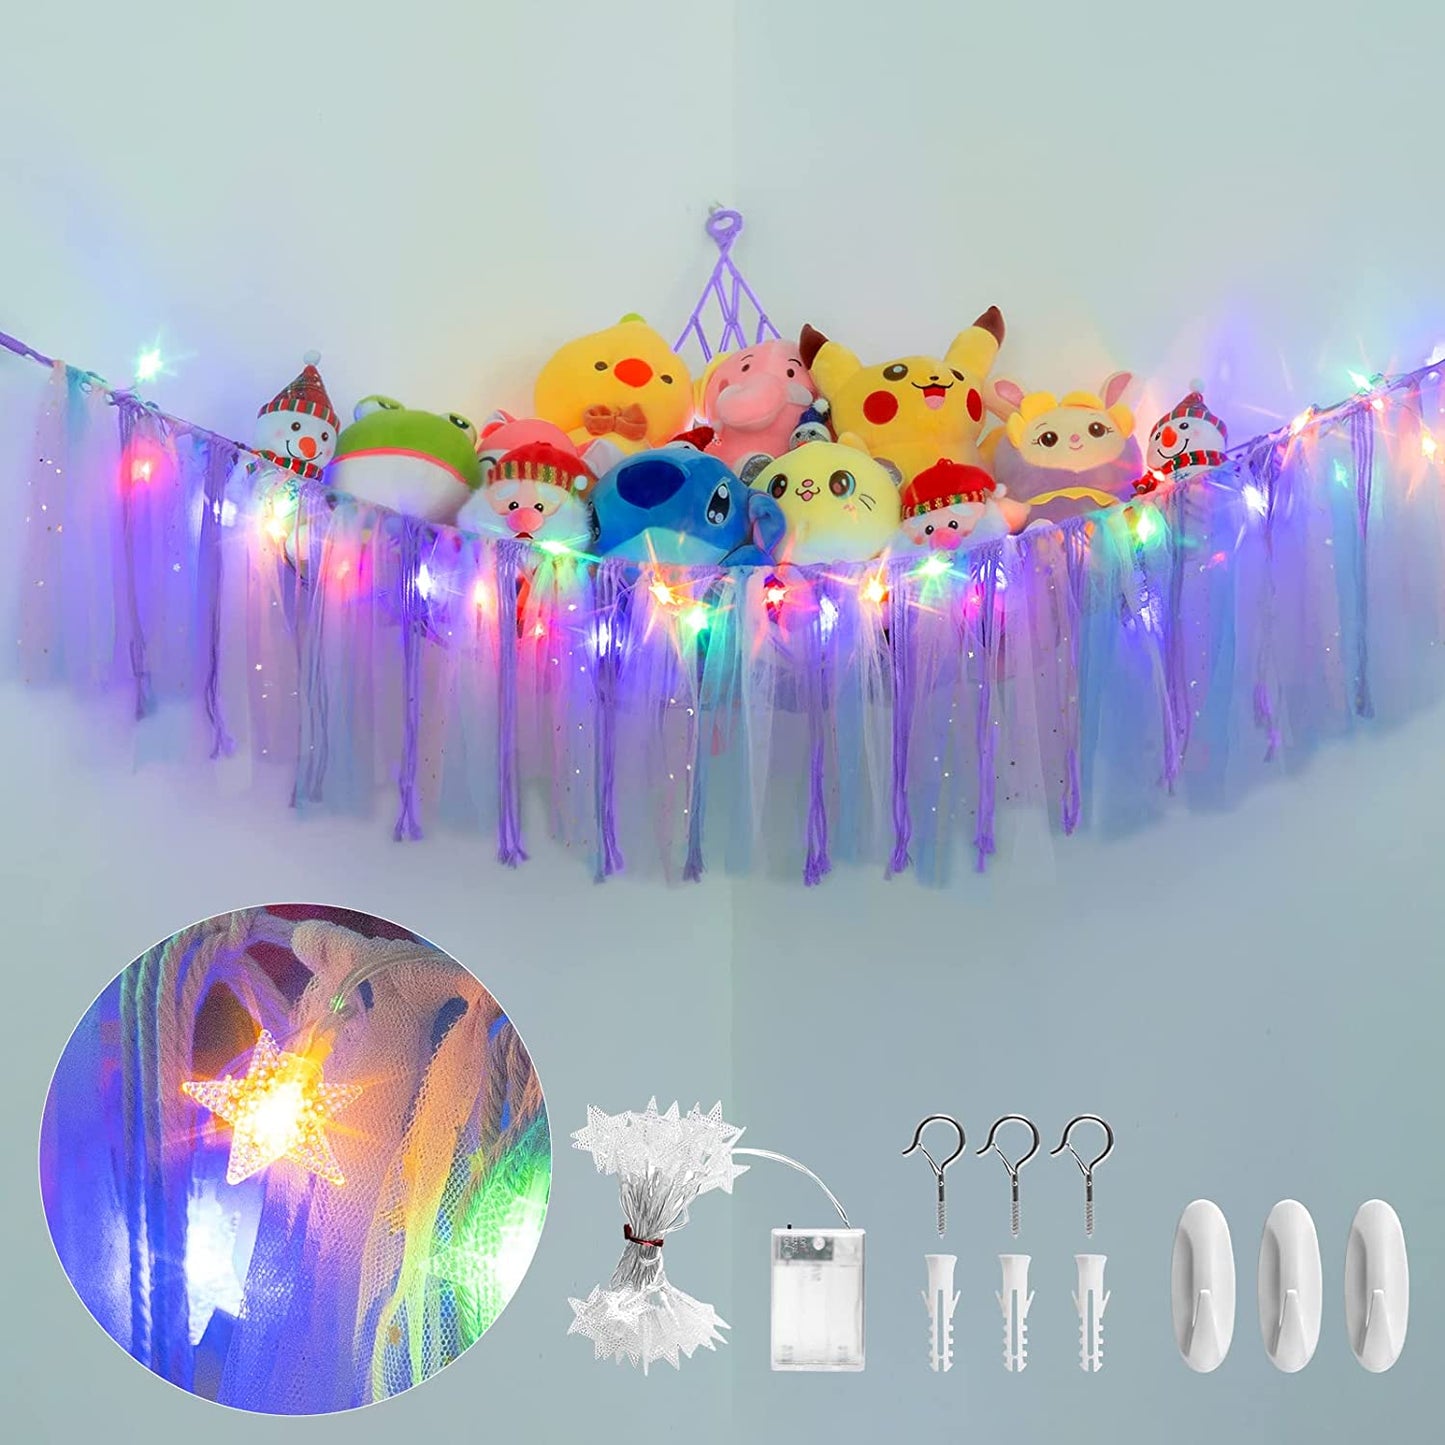 Stuffed Animal Net or Hammock with Led Light – ieBabay